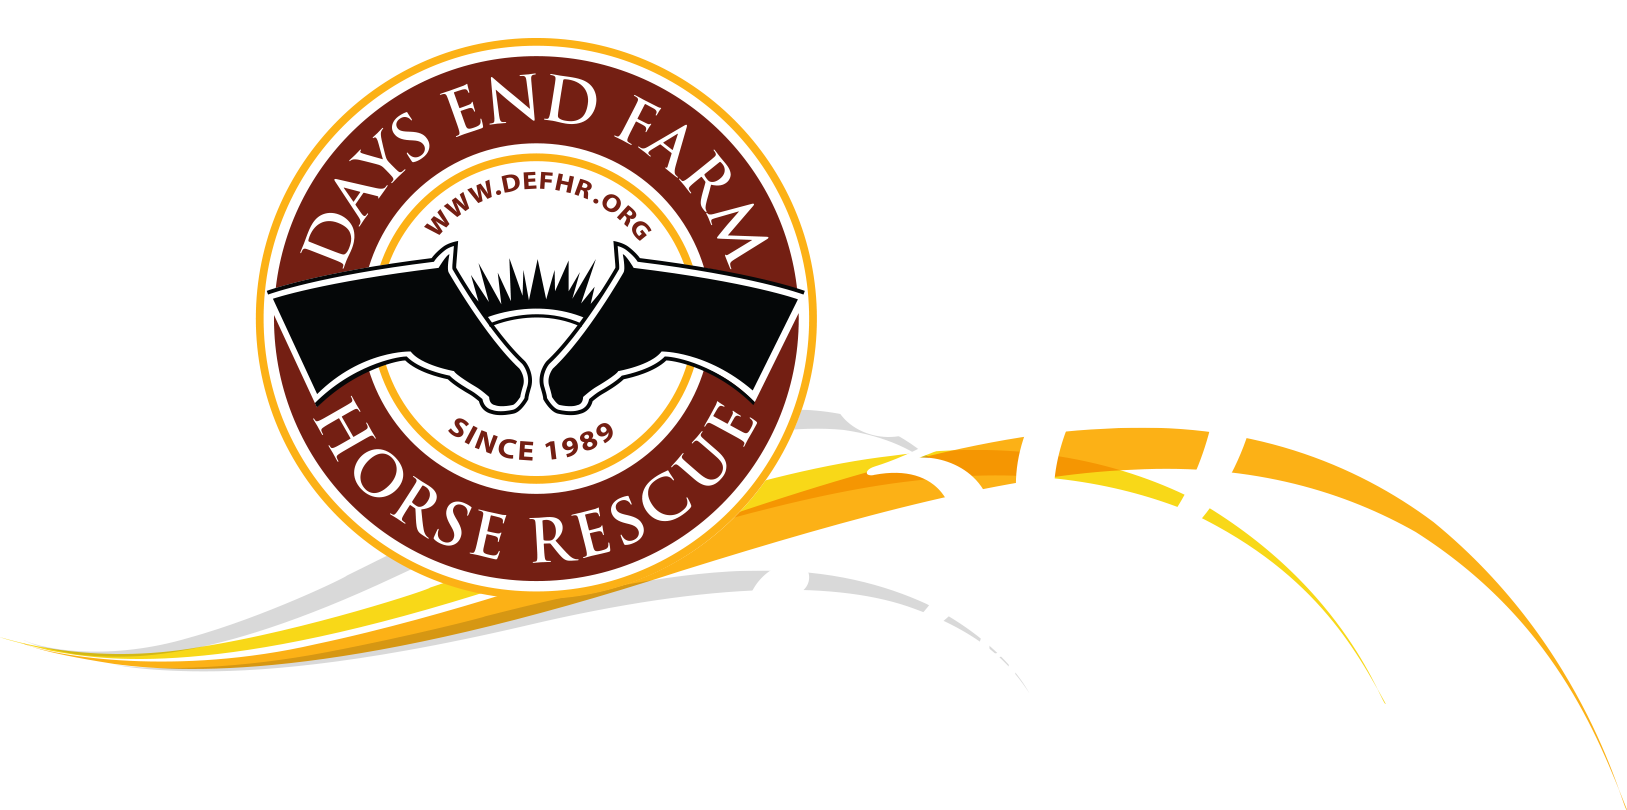 Days End Farm Horse Rescue